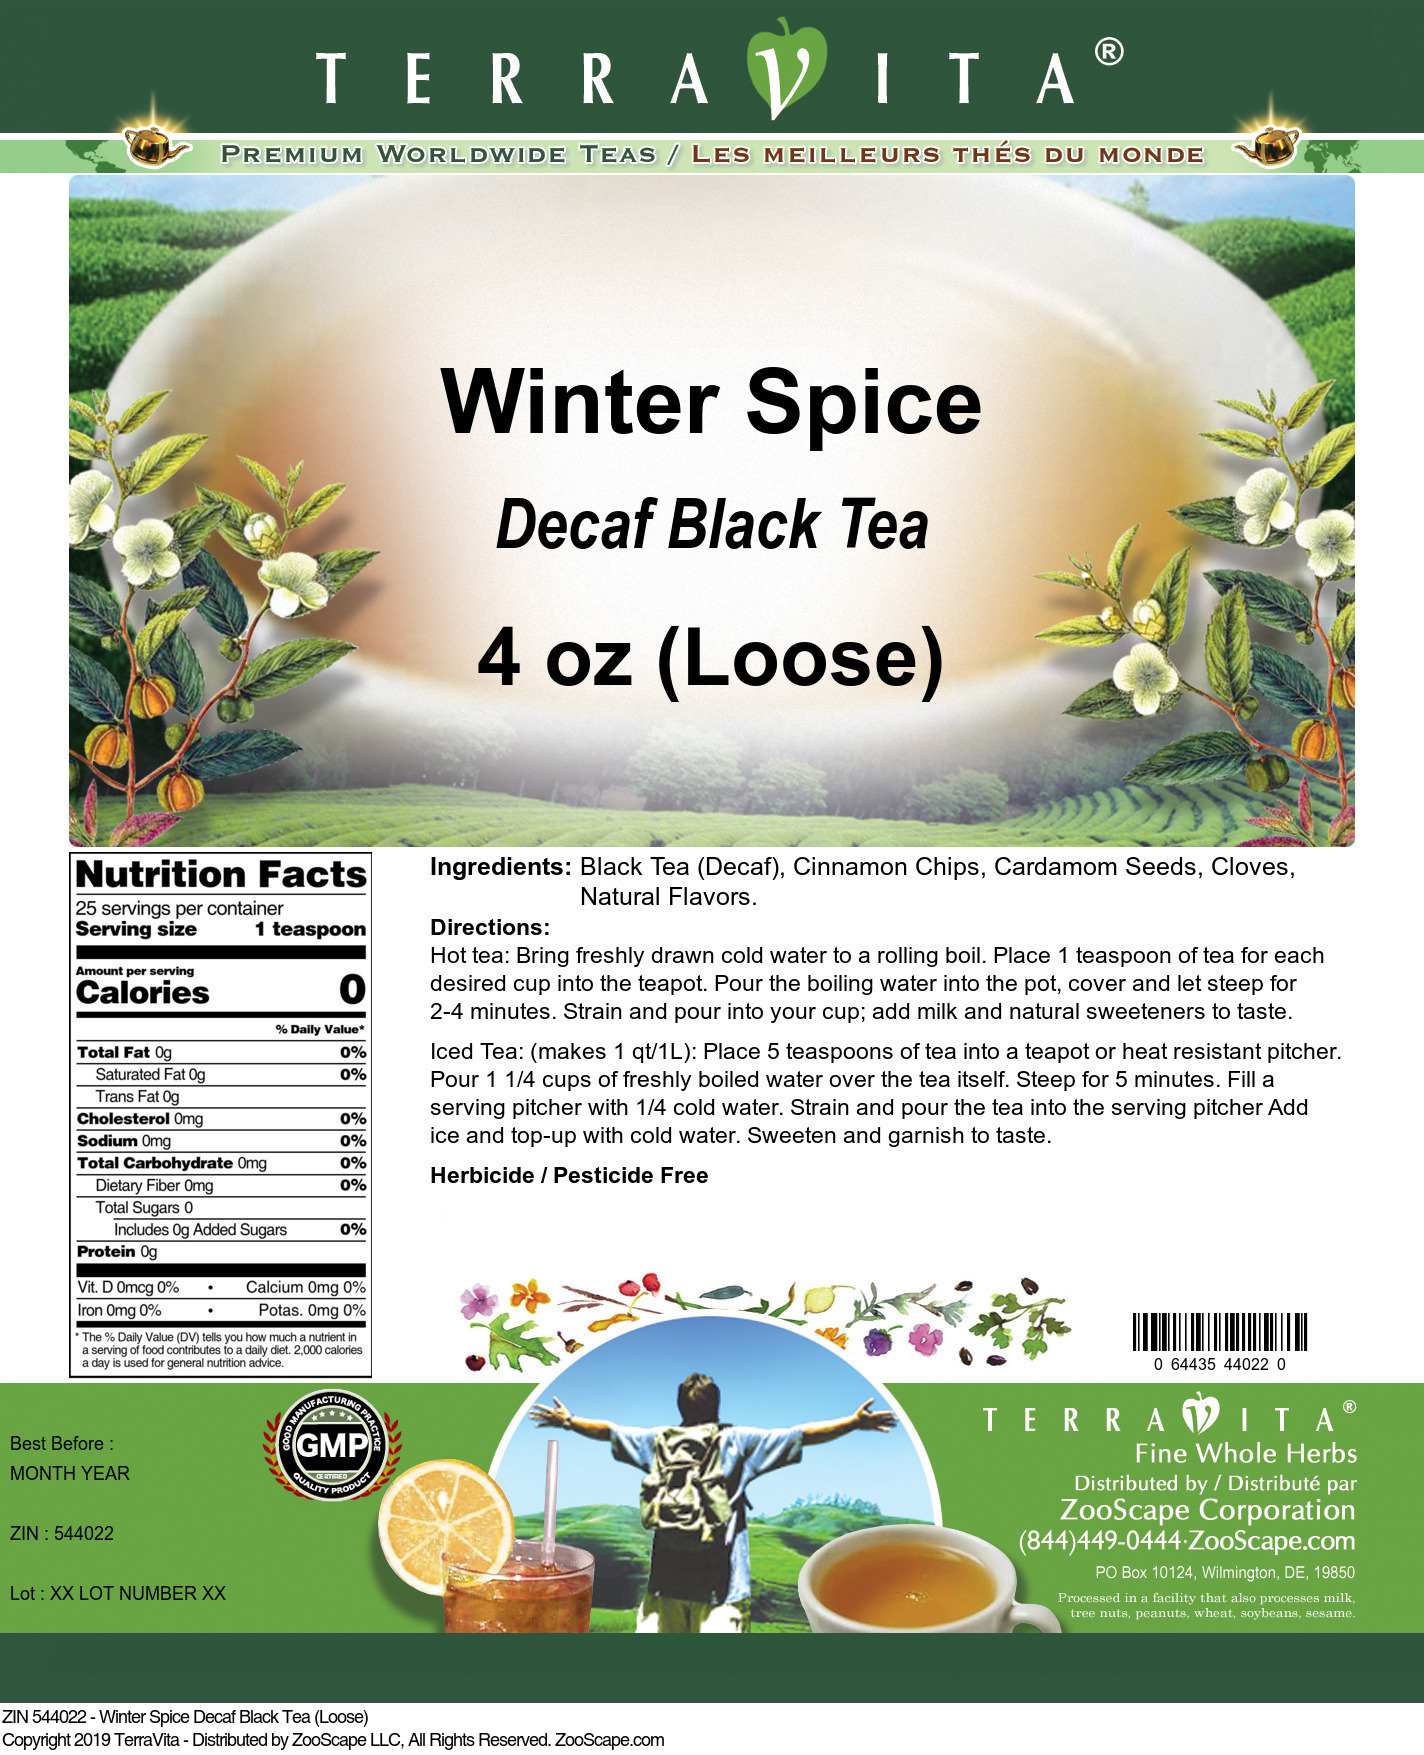 Winter Spice Decaf Black Tea (Loose) - Label